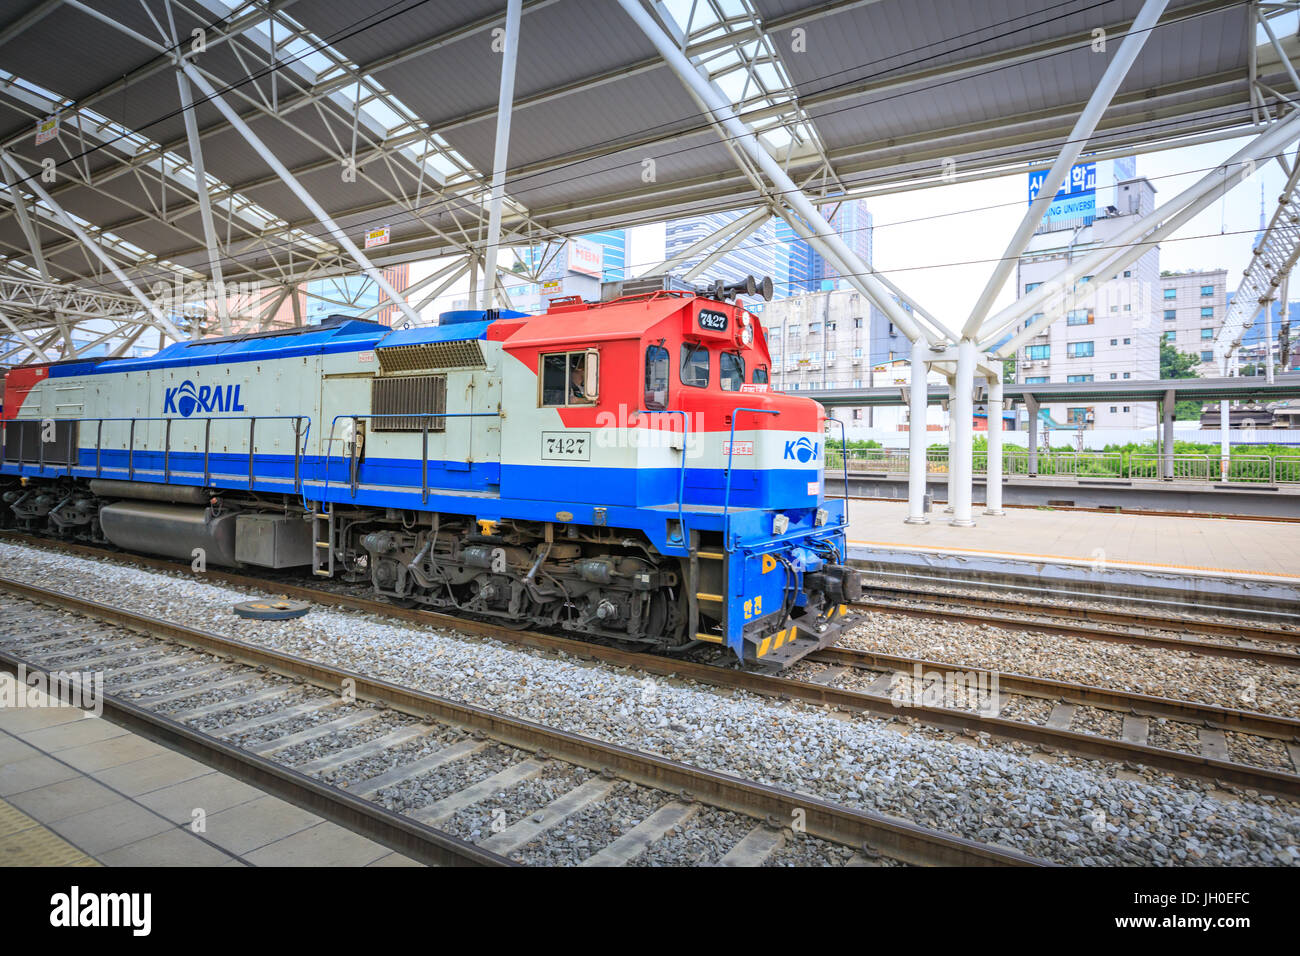 Jun 20, 2017 Korail train at the Seoul station in South Korea - tour Stock Photo